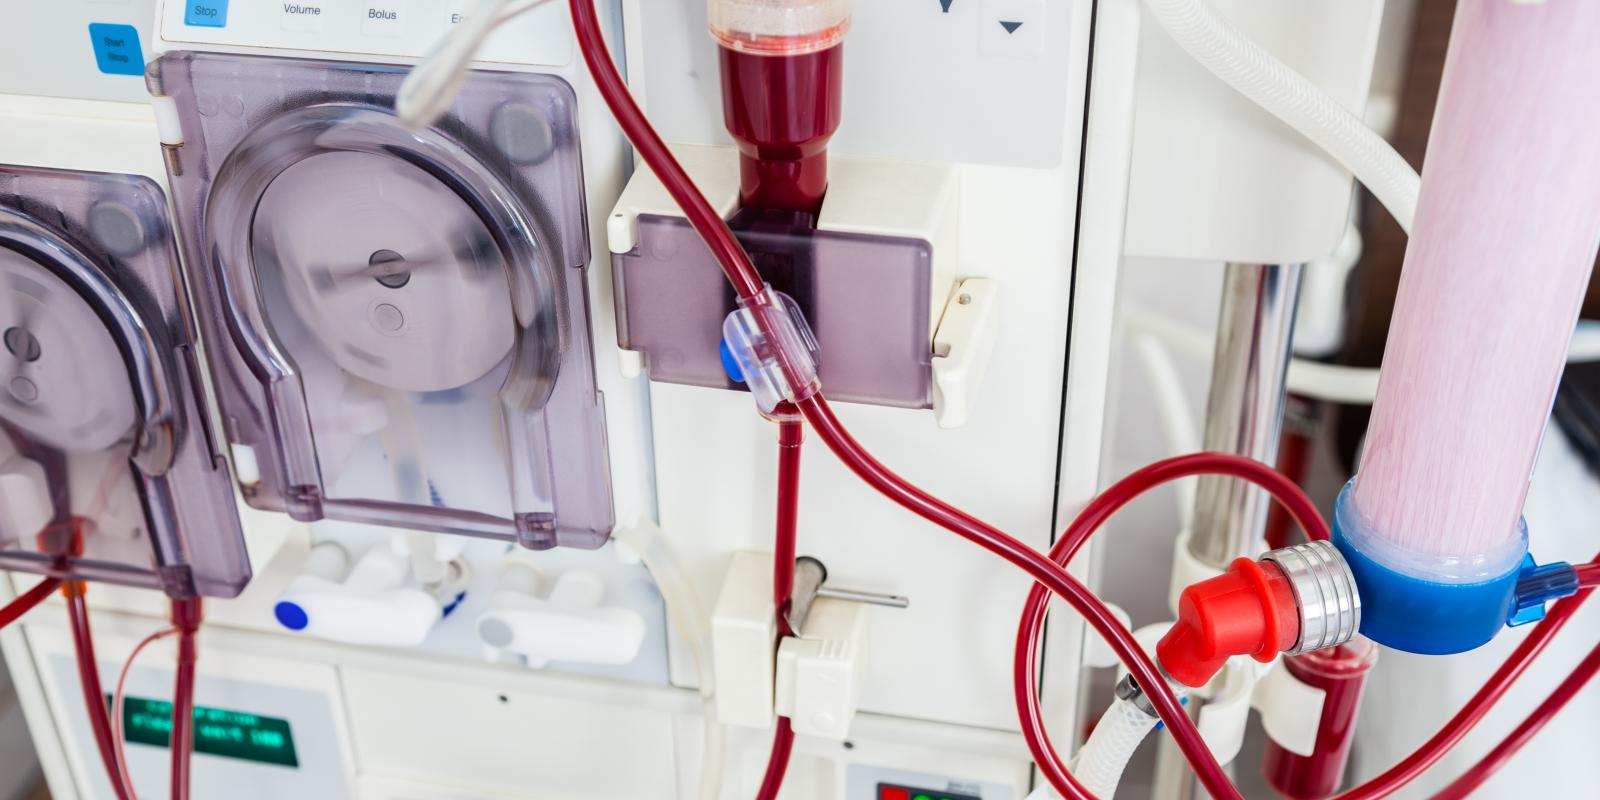 hemodialysis-a-type-of-dialysis-american-kidney-fund